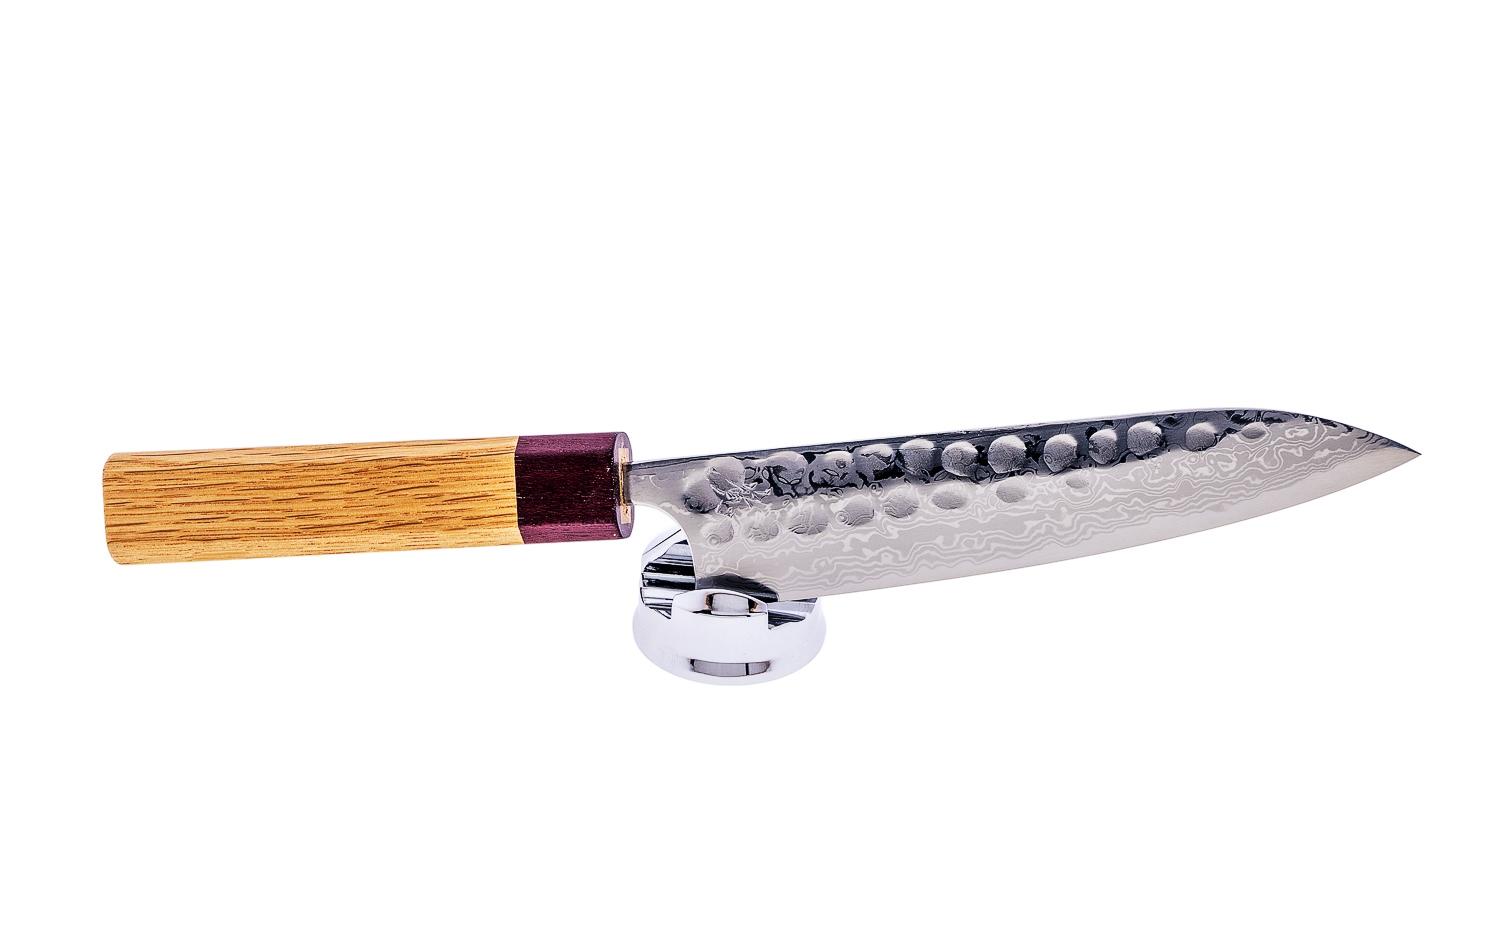 Cuchillo utilitario Yoshihiro Olmo 15cm